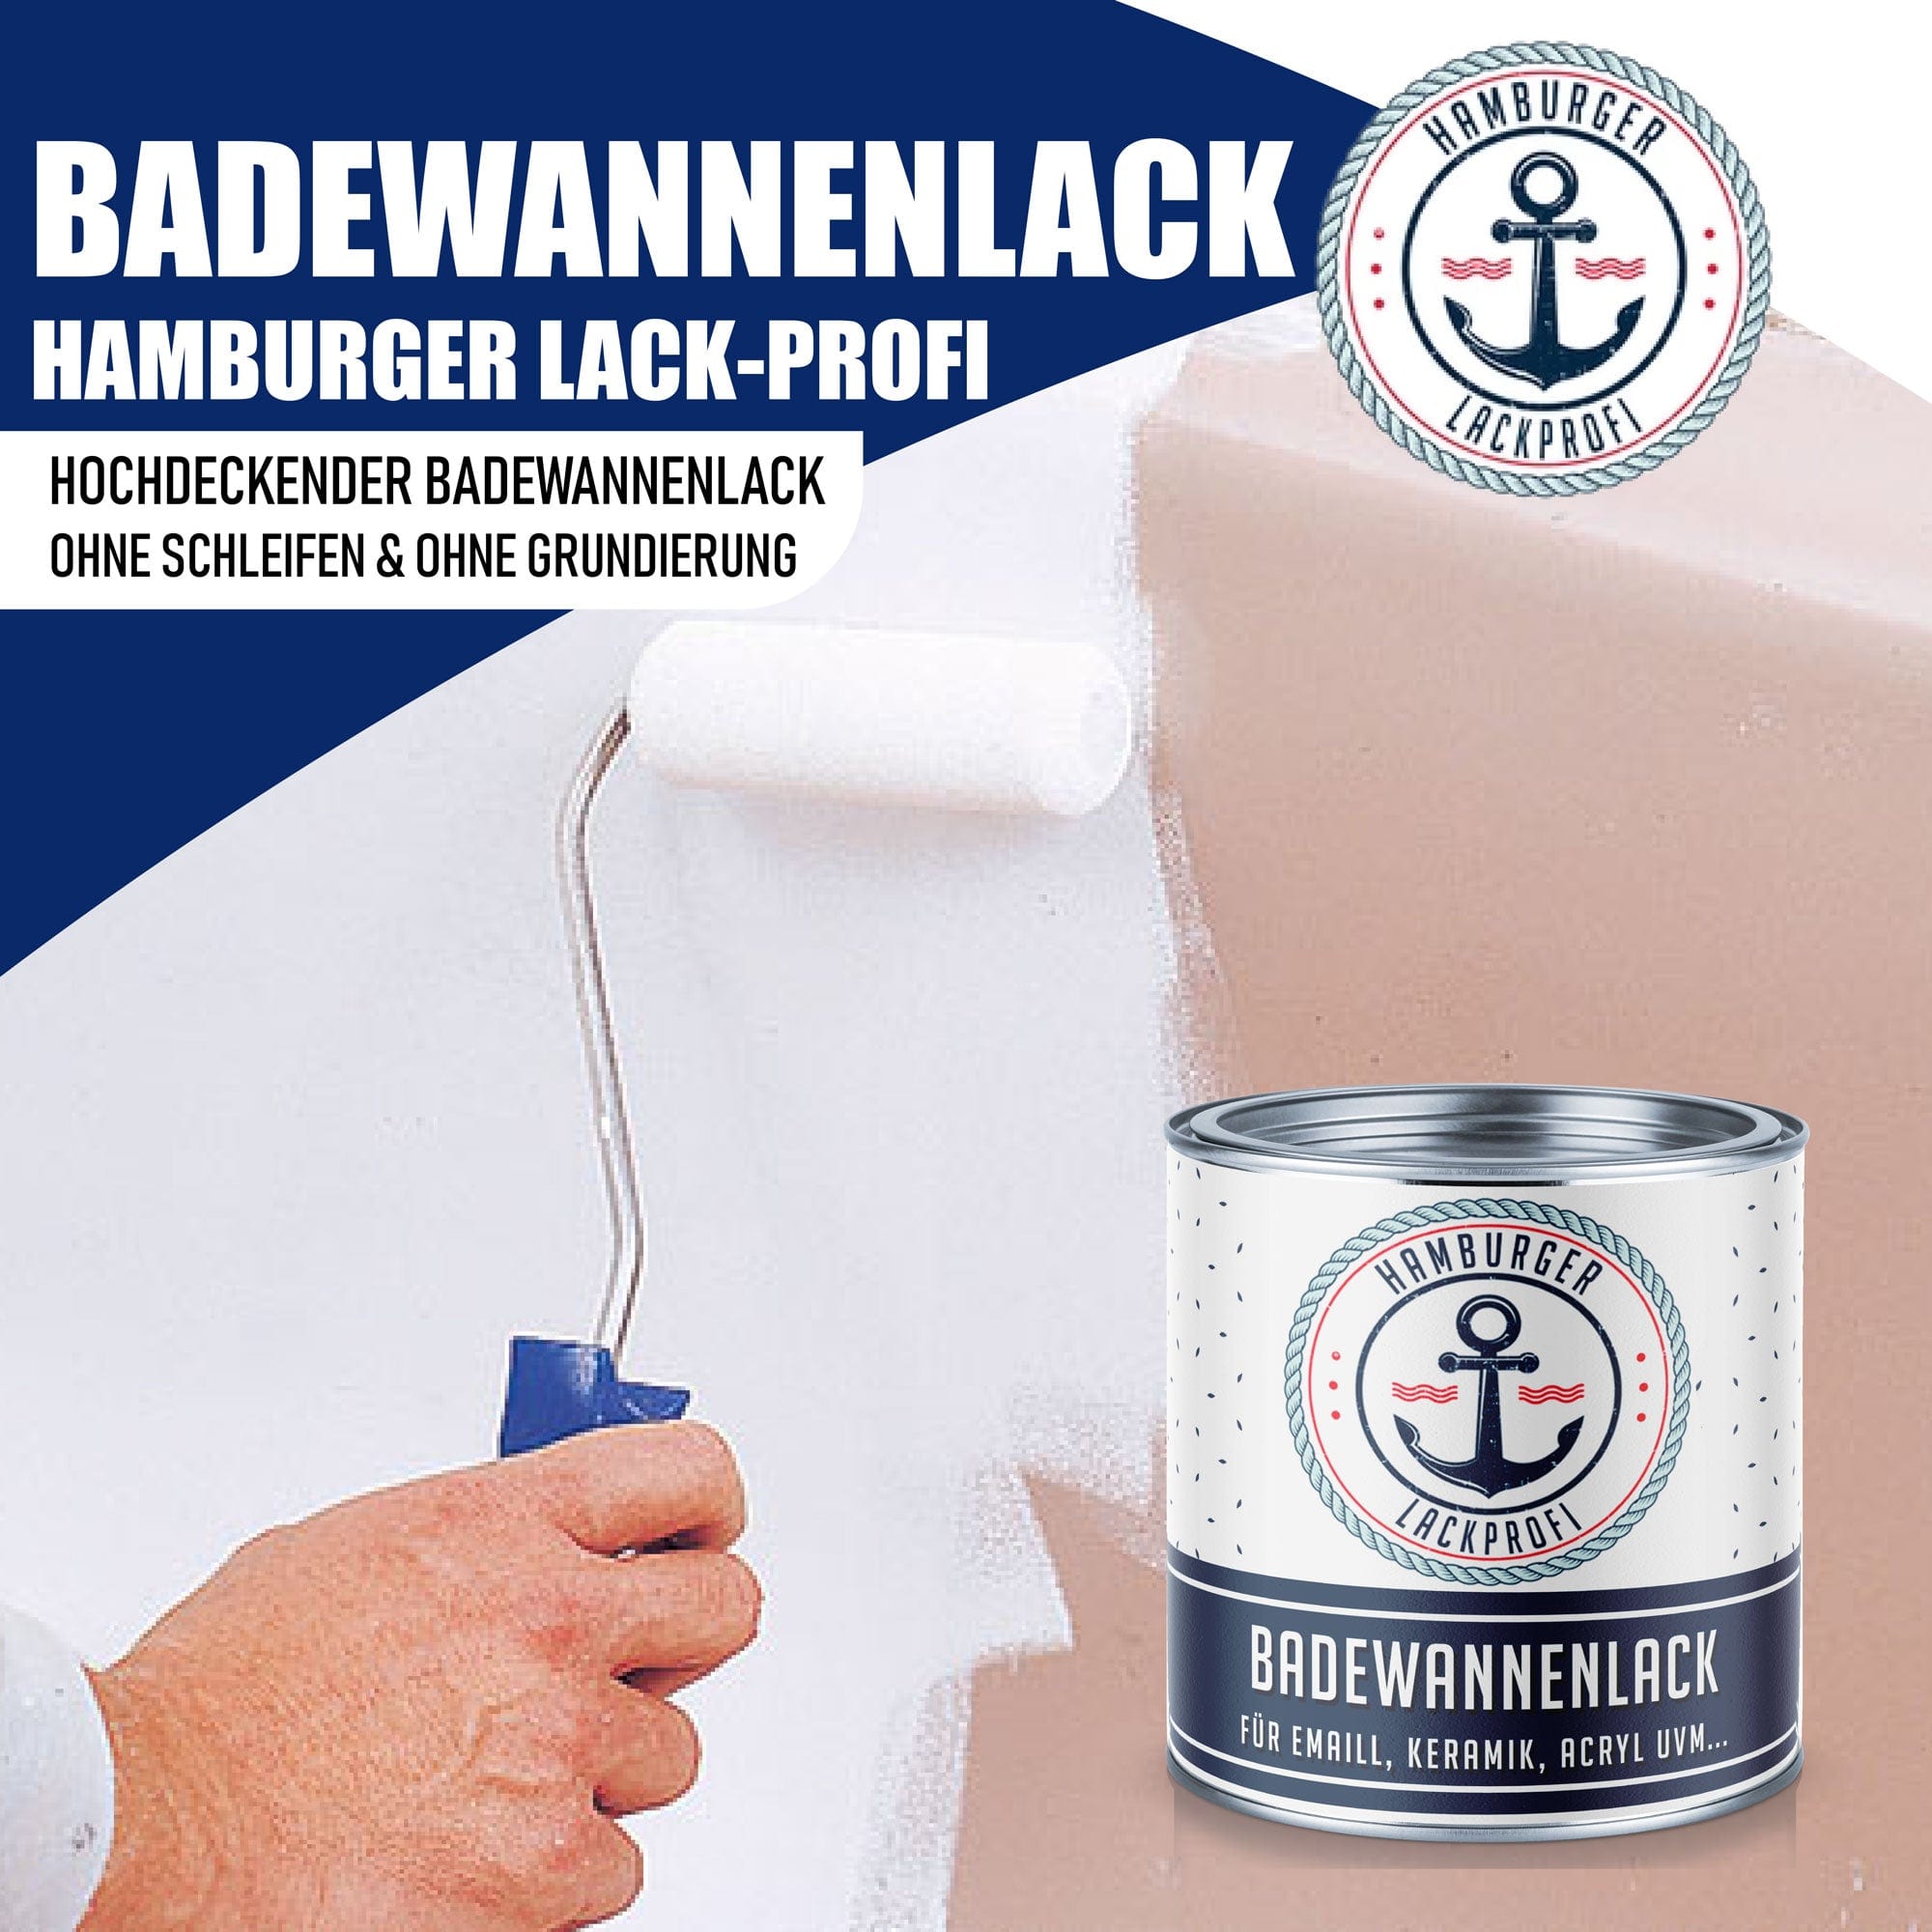 Hamburger Lack-Profi Badewannenlack Hamburger Lack-Profi 2K Badewannenlack Grauoliv RAL 6006 - Glänzend / Seidenmatt / Matt